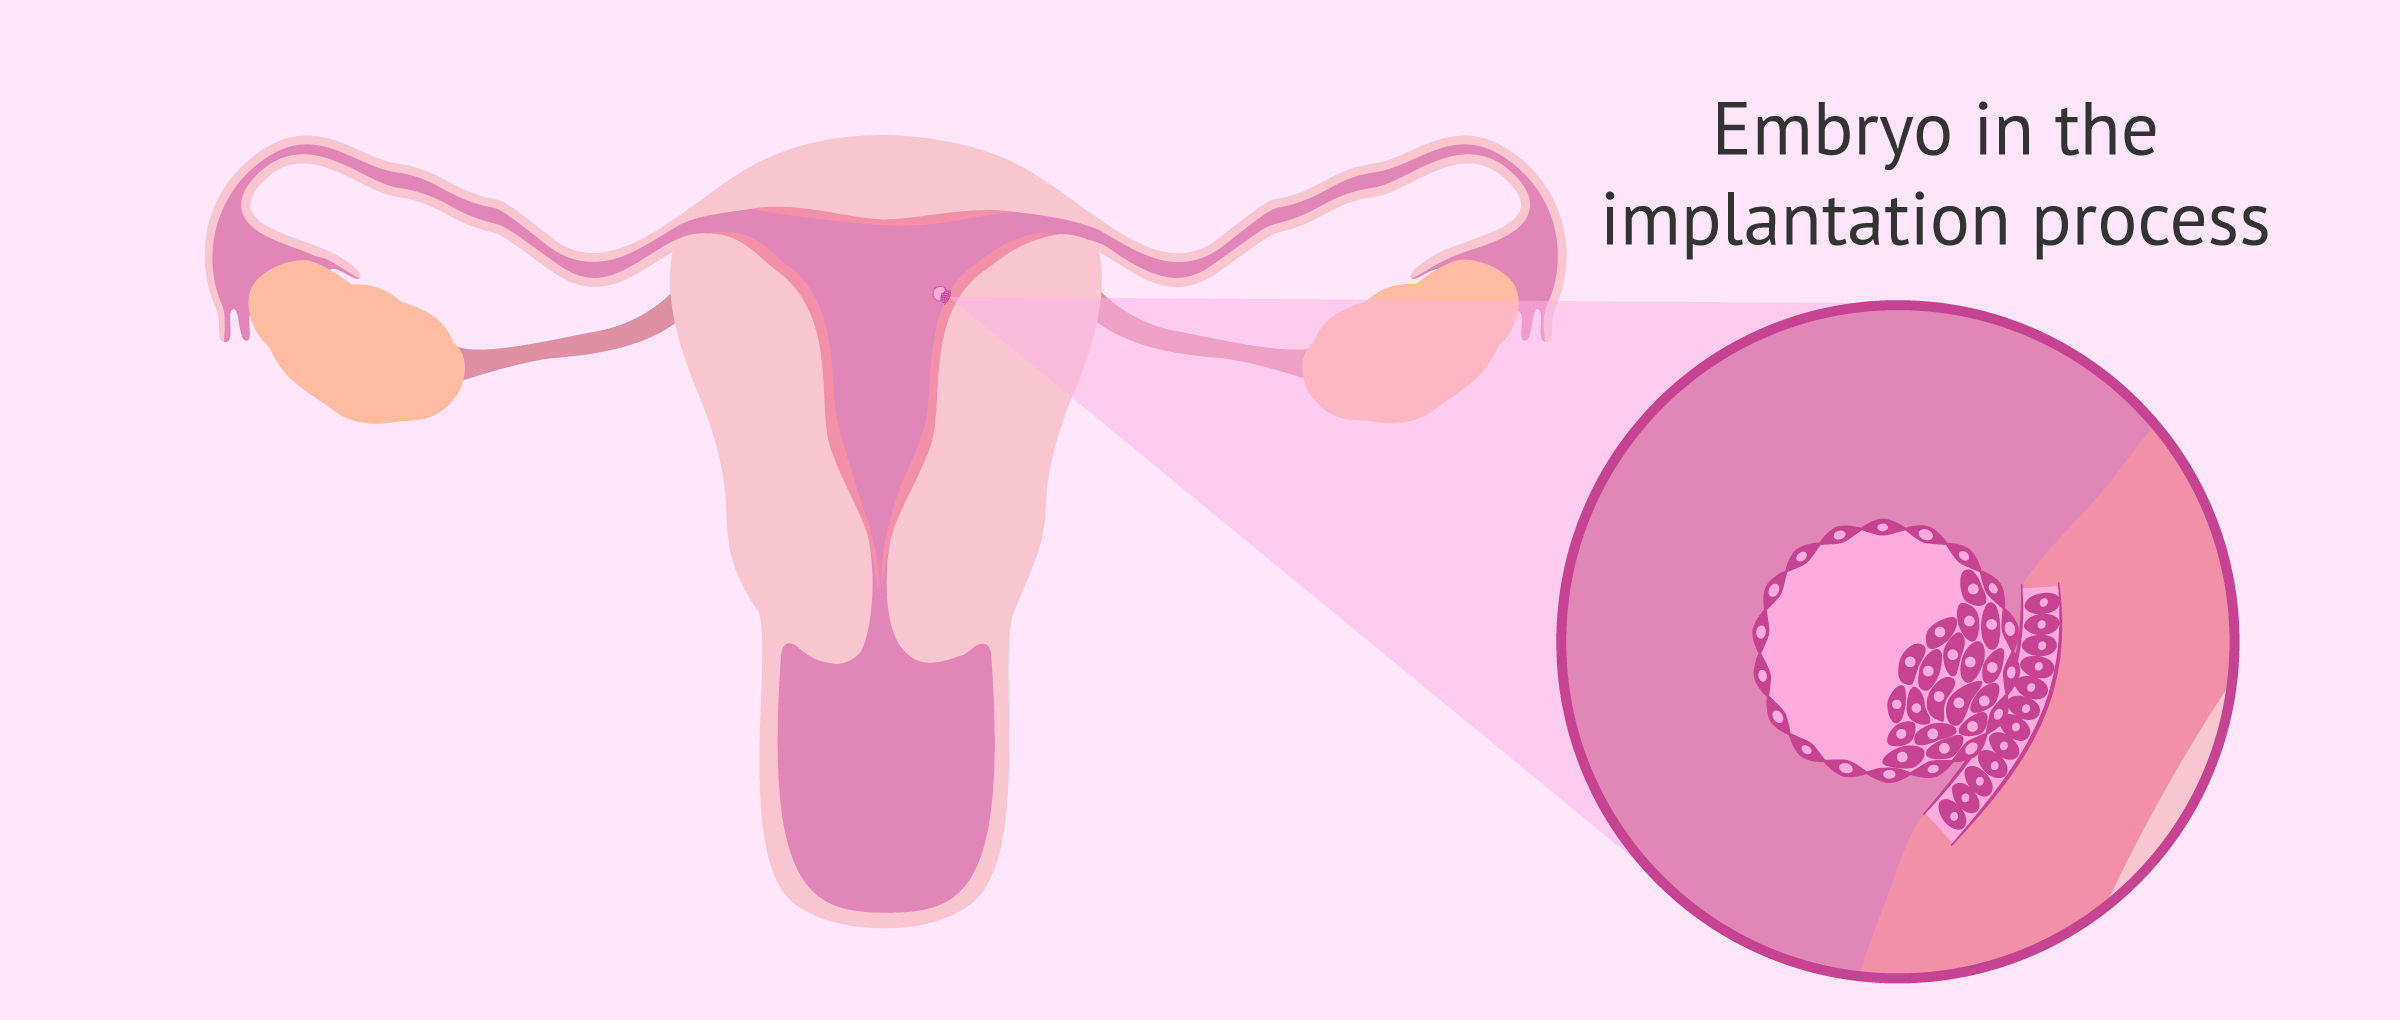 Embryo implantation into the receptive endometrium